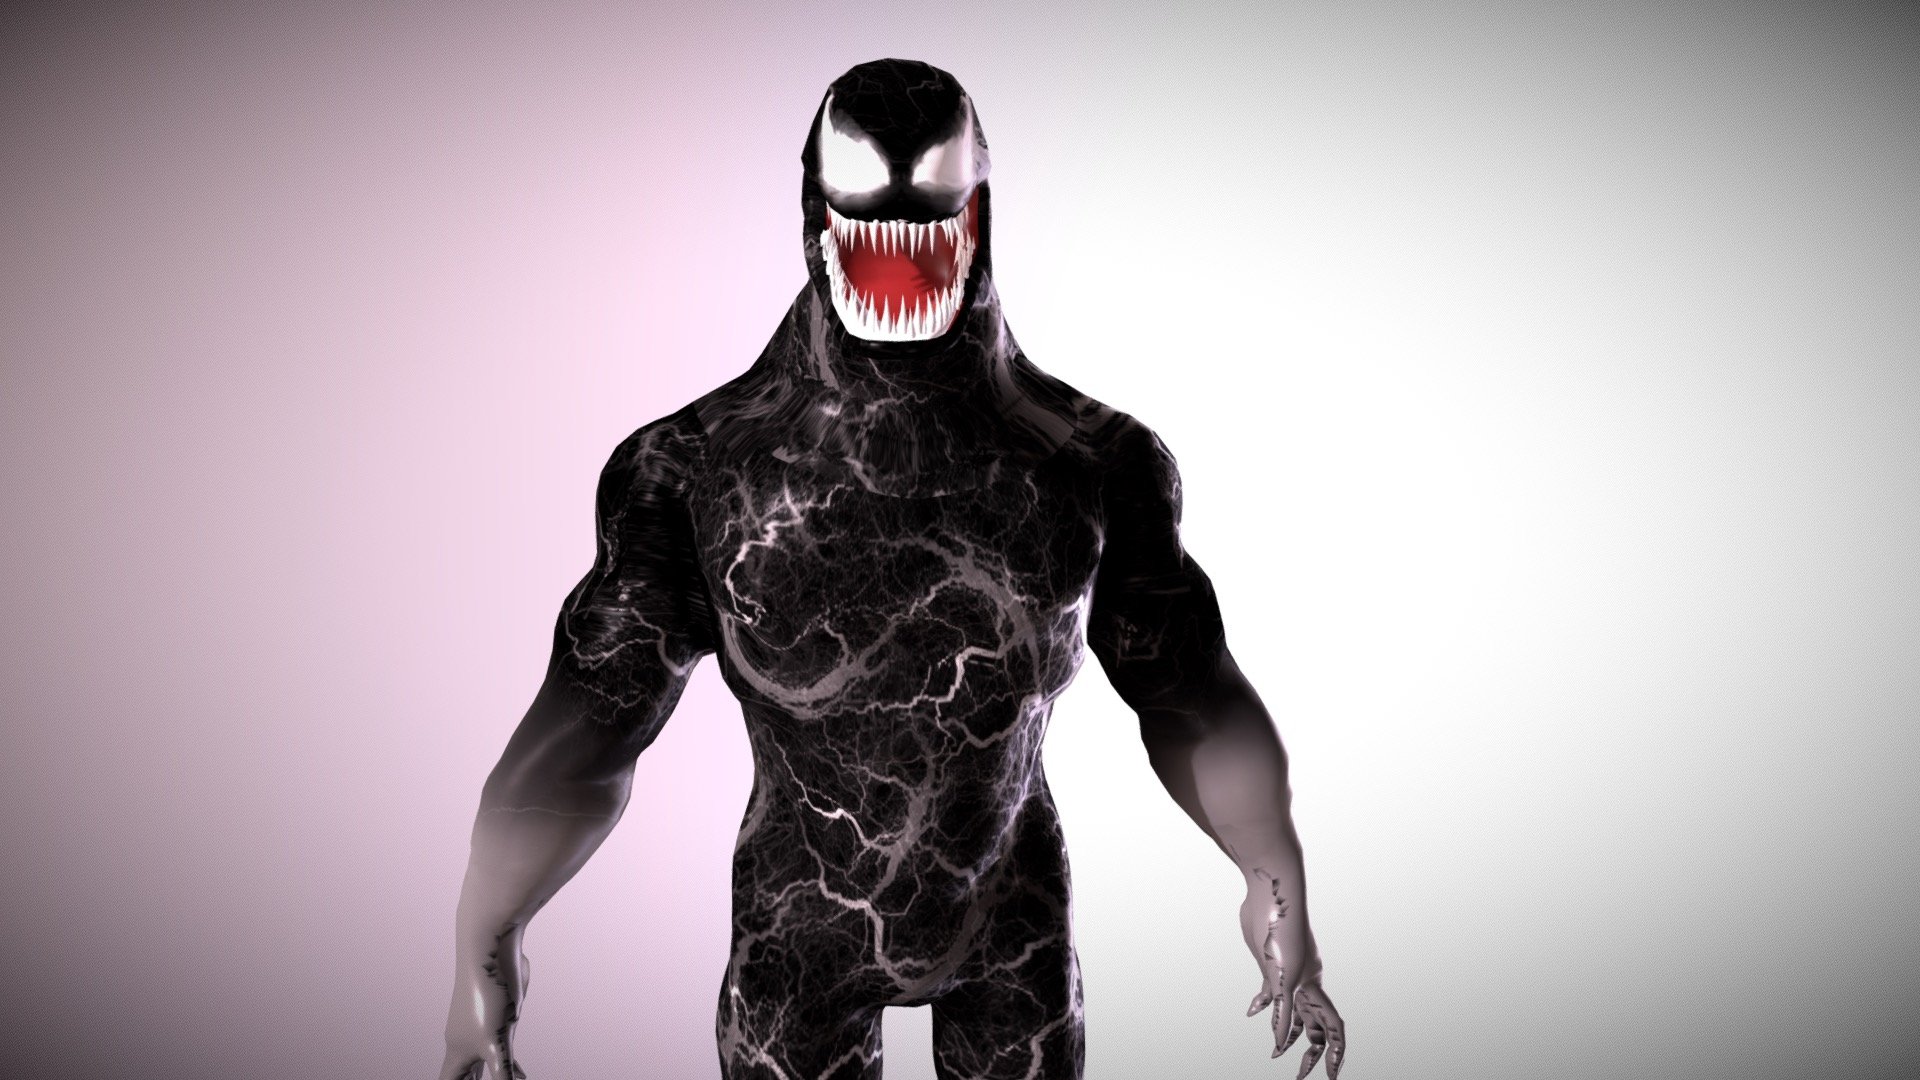 Venom - 3D model by gaifsportee.